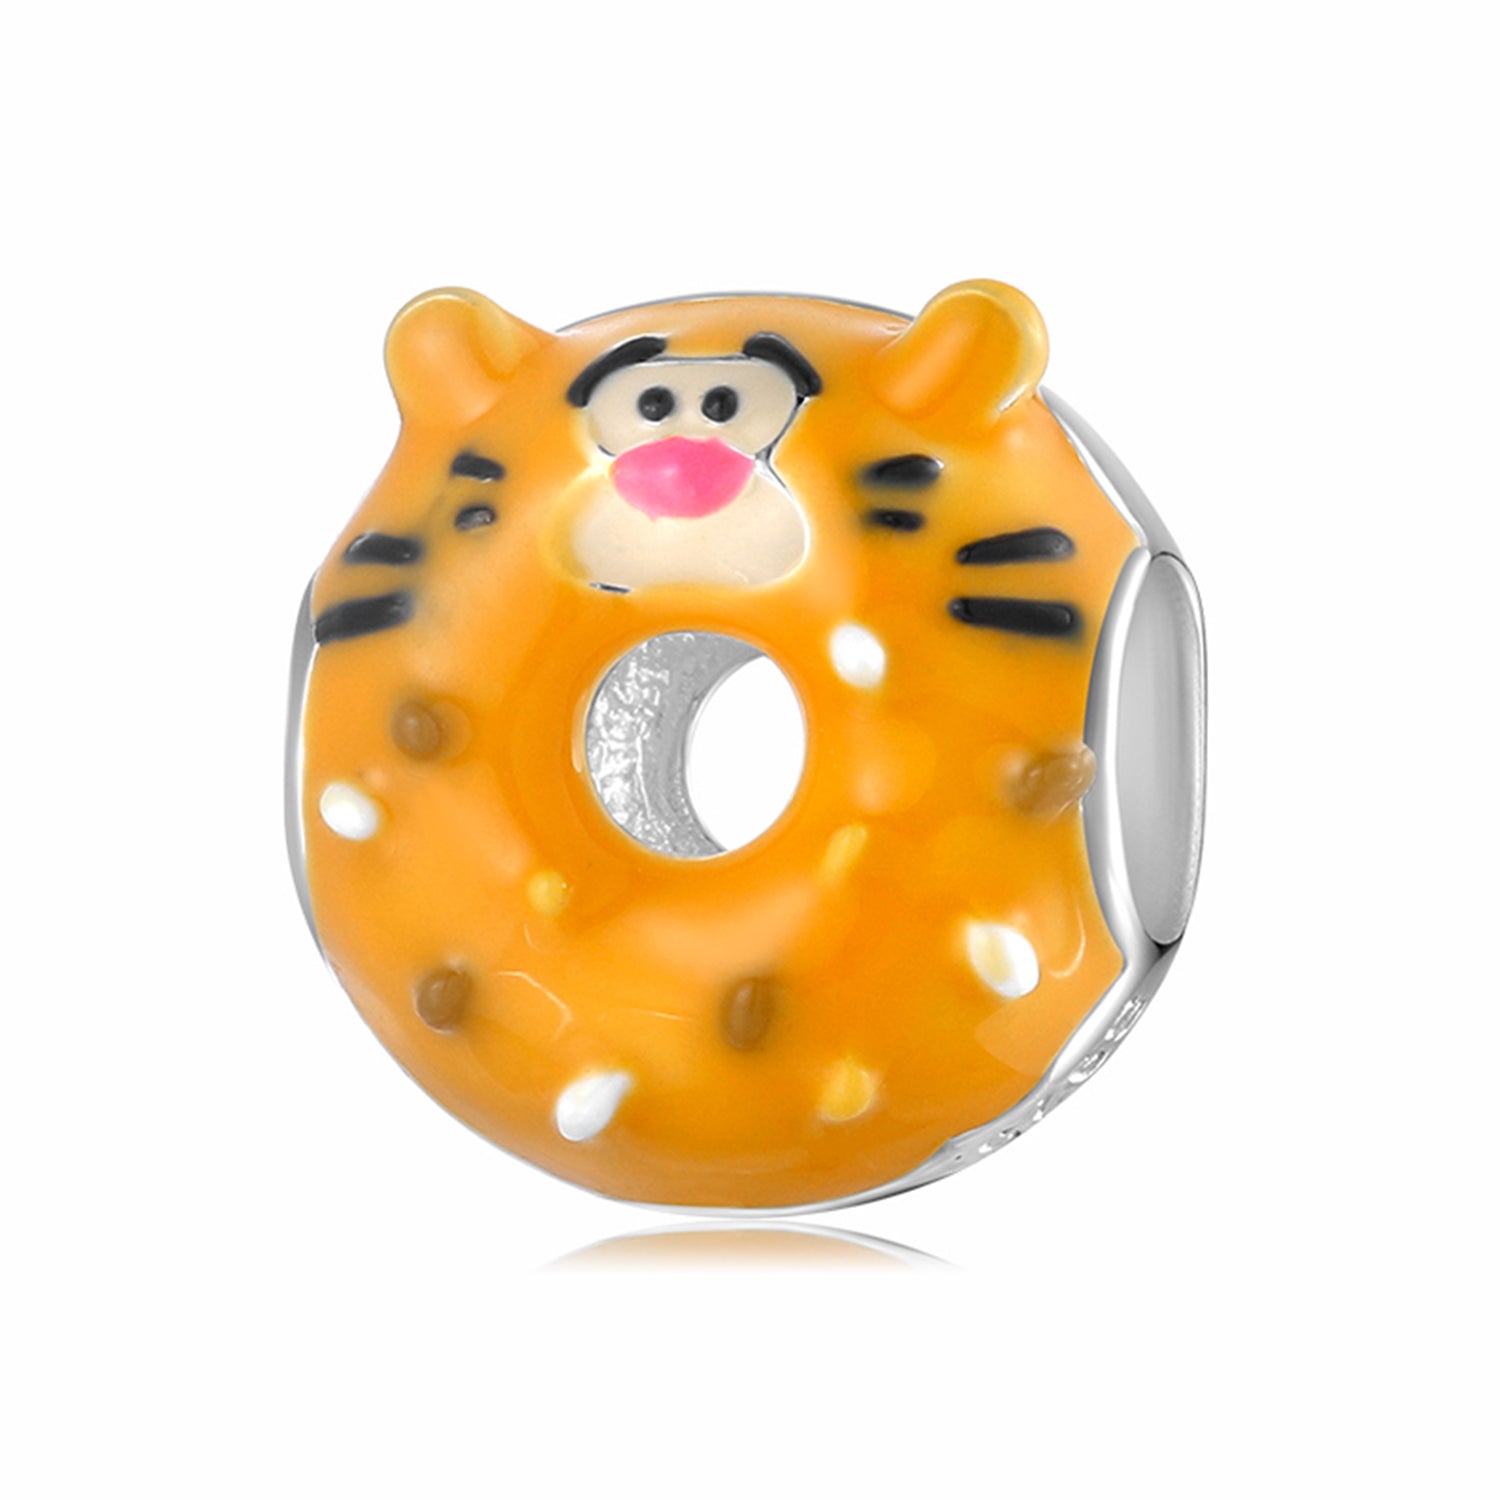 Tigger as a donut